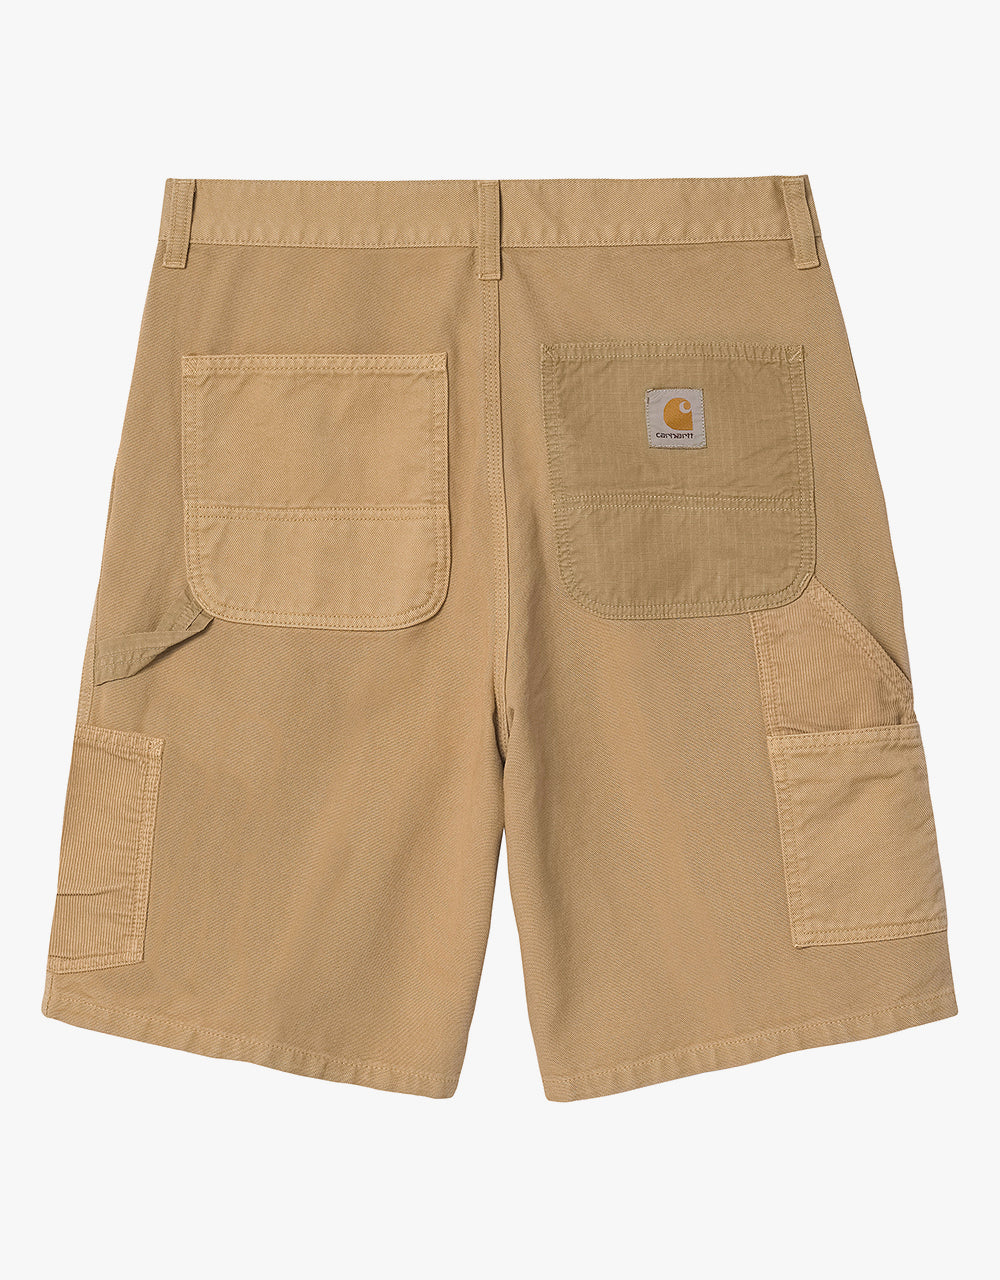 Carhartt WIP Medley Short - Dusty H Brown (Garment Dyed)